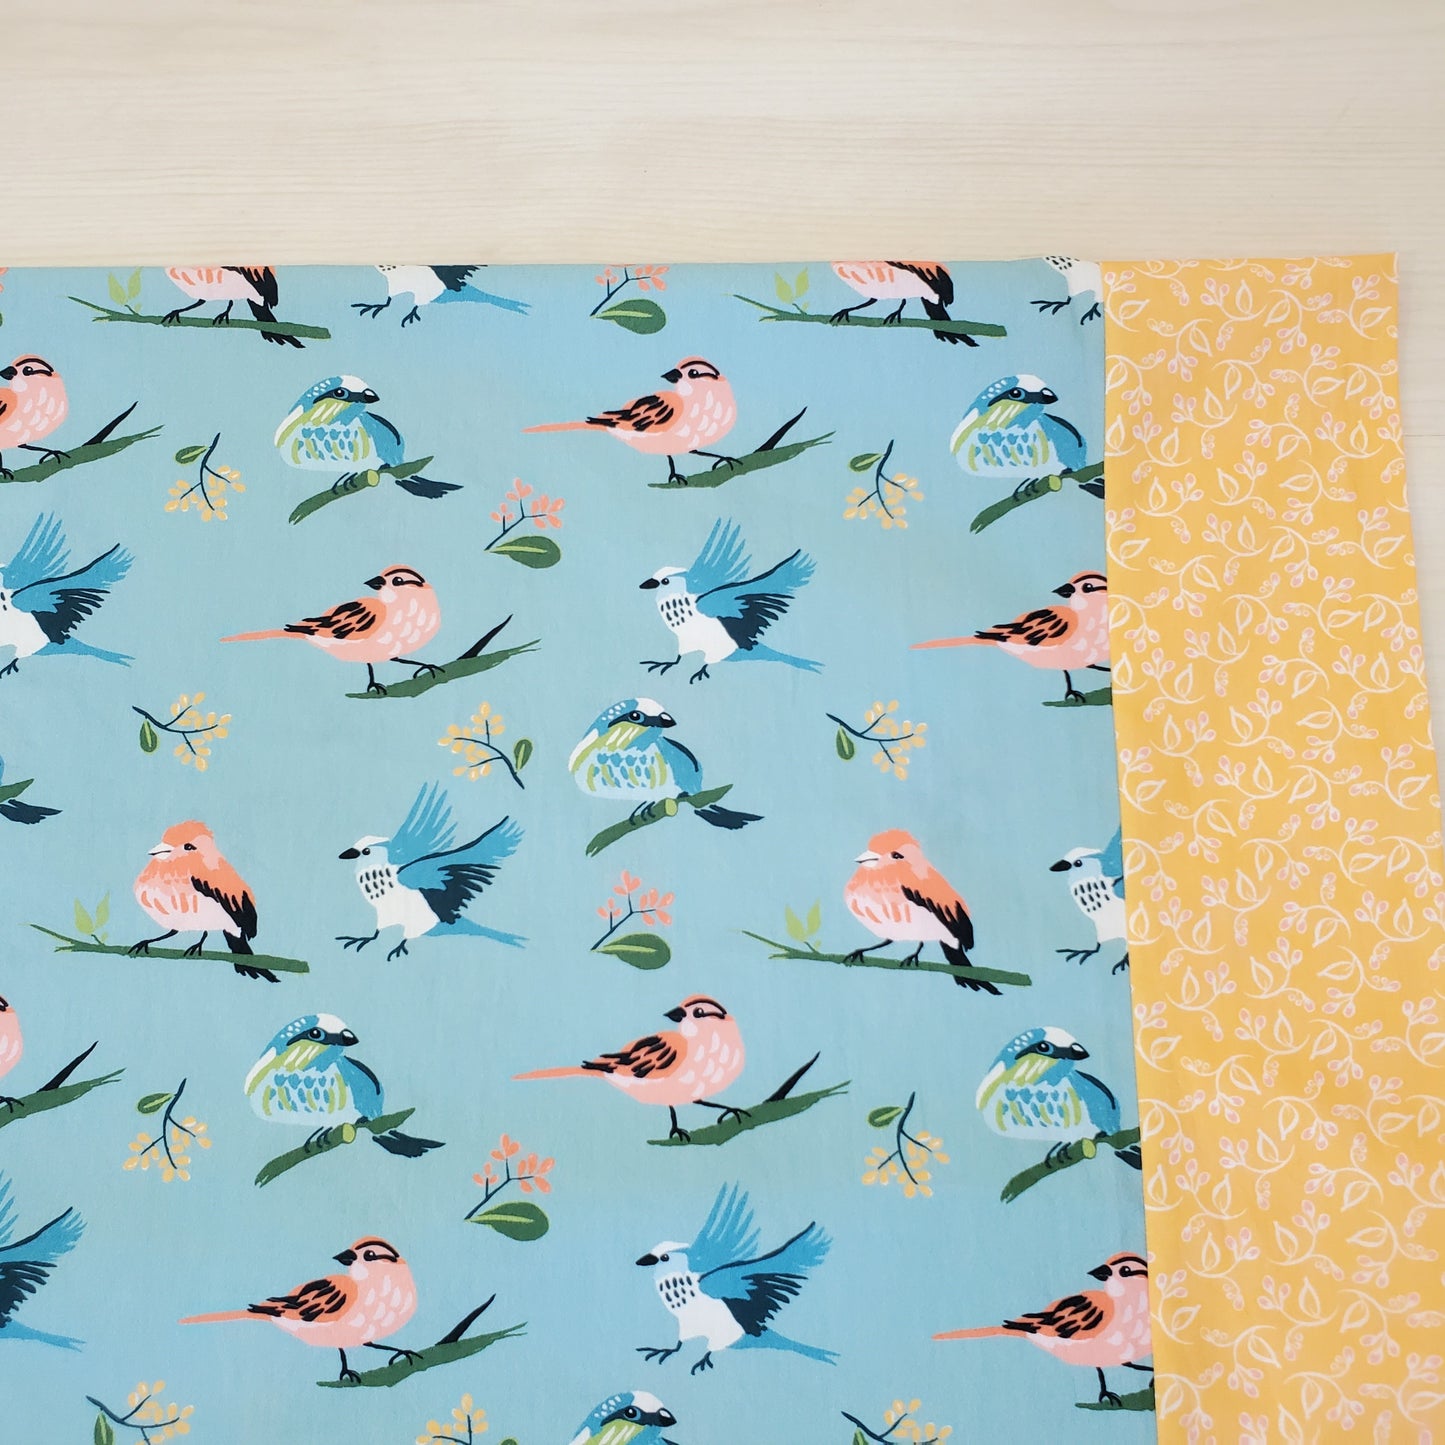 Organic Cotton Pillowcases in Bird Print